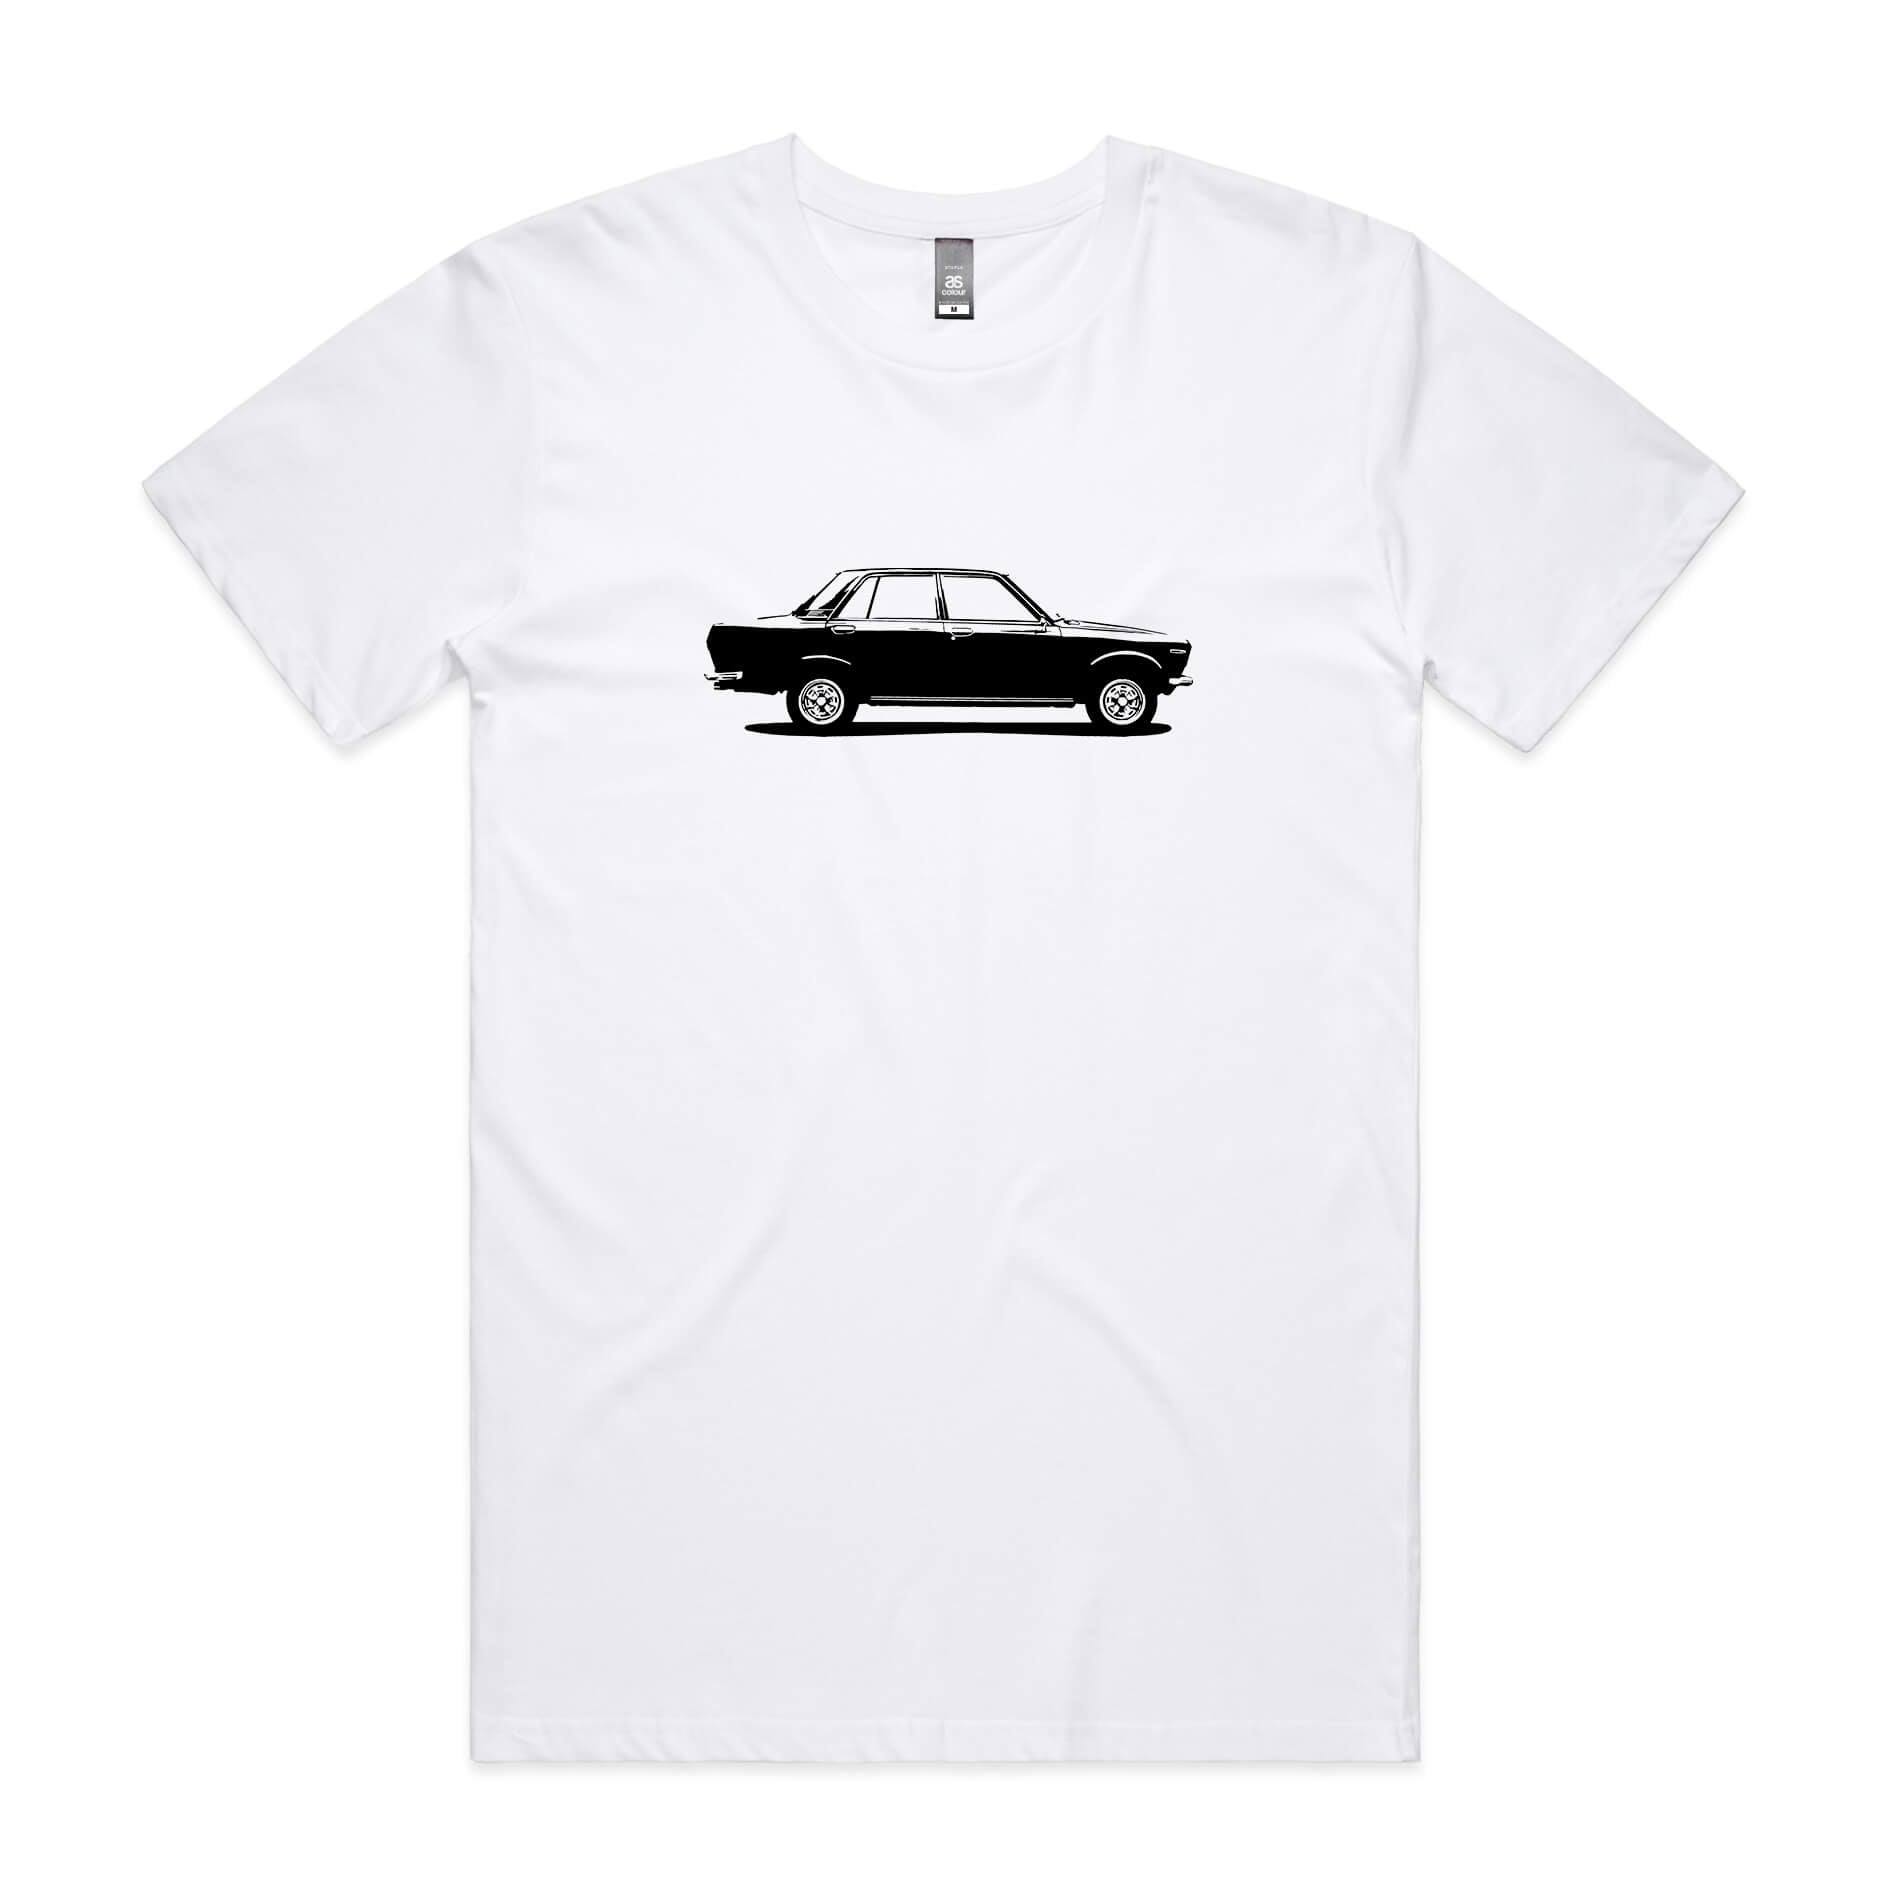 Datsun 1600 t-shirt in white